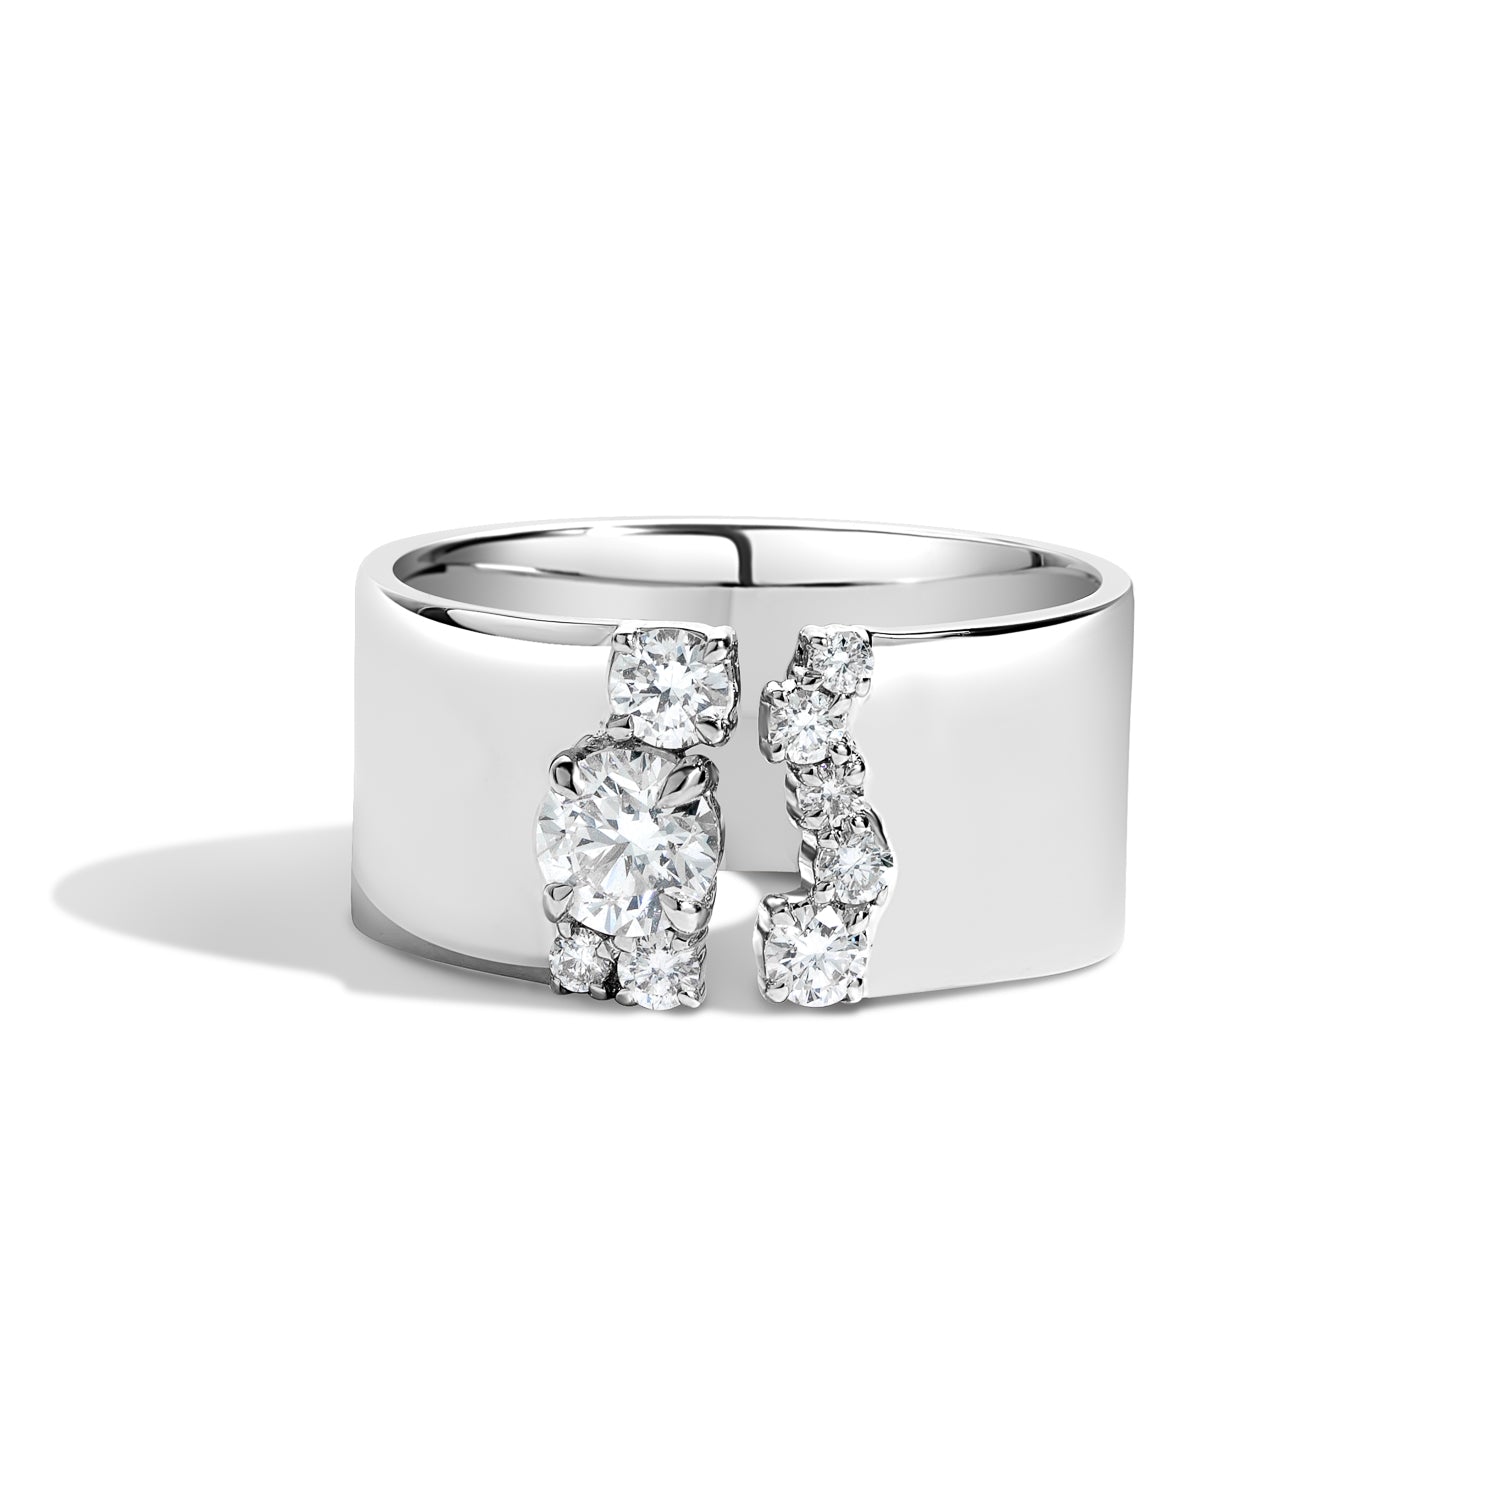 Shahla Karimi Jewelry Cluster Ring 14K White Gold or Platinum